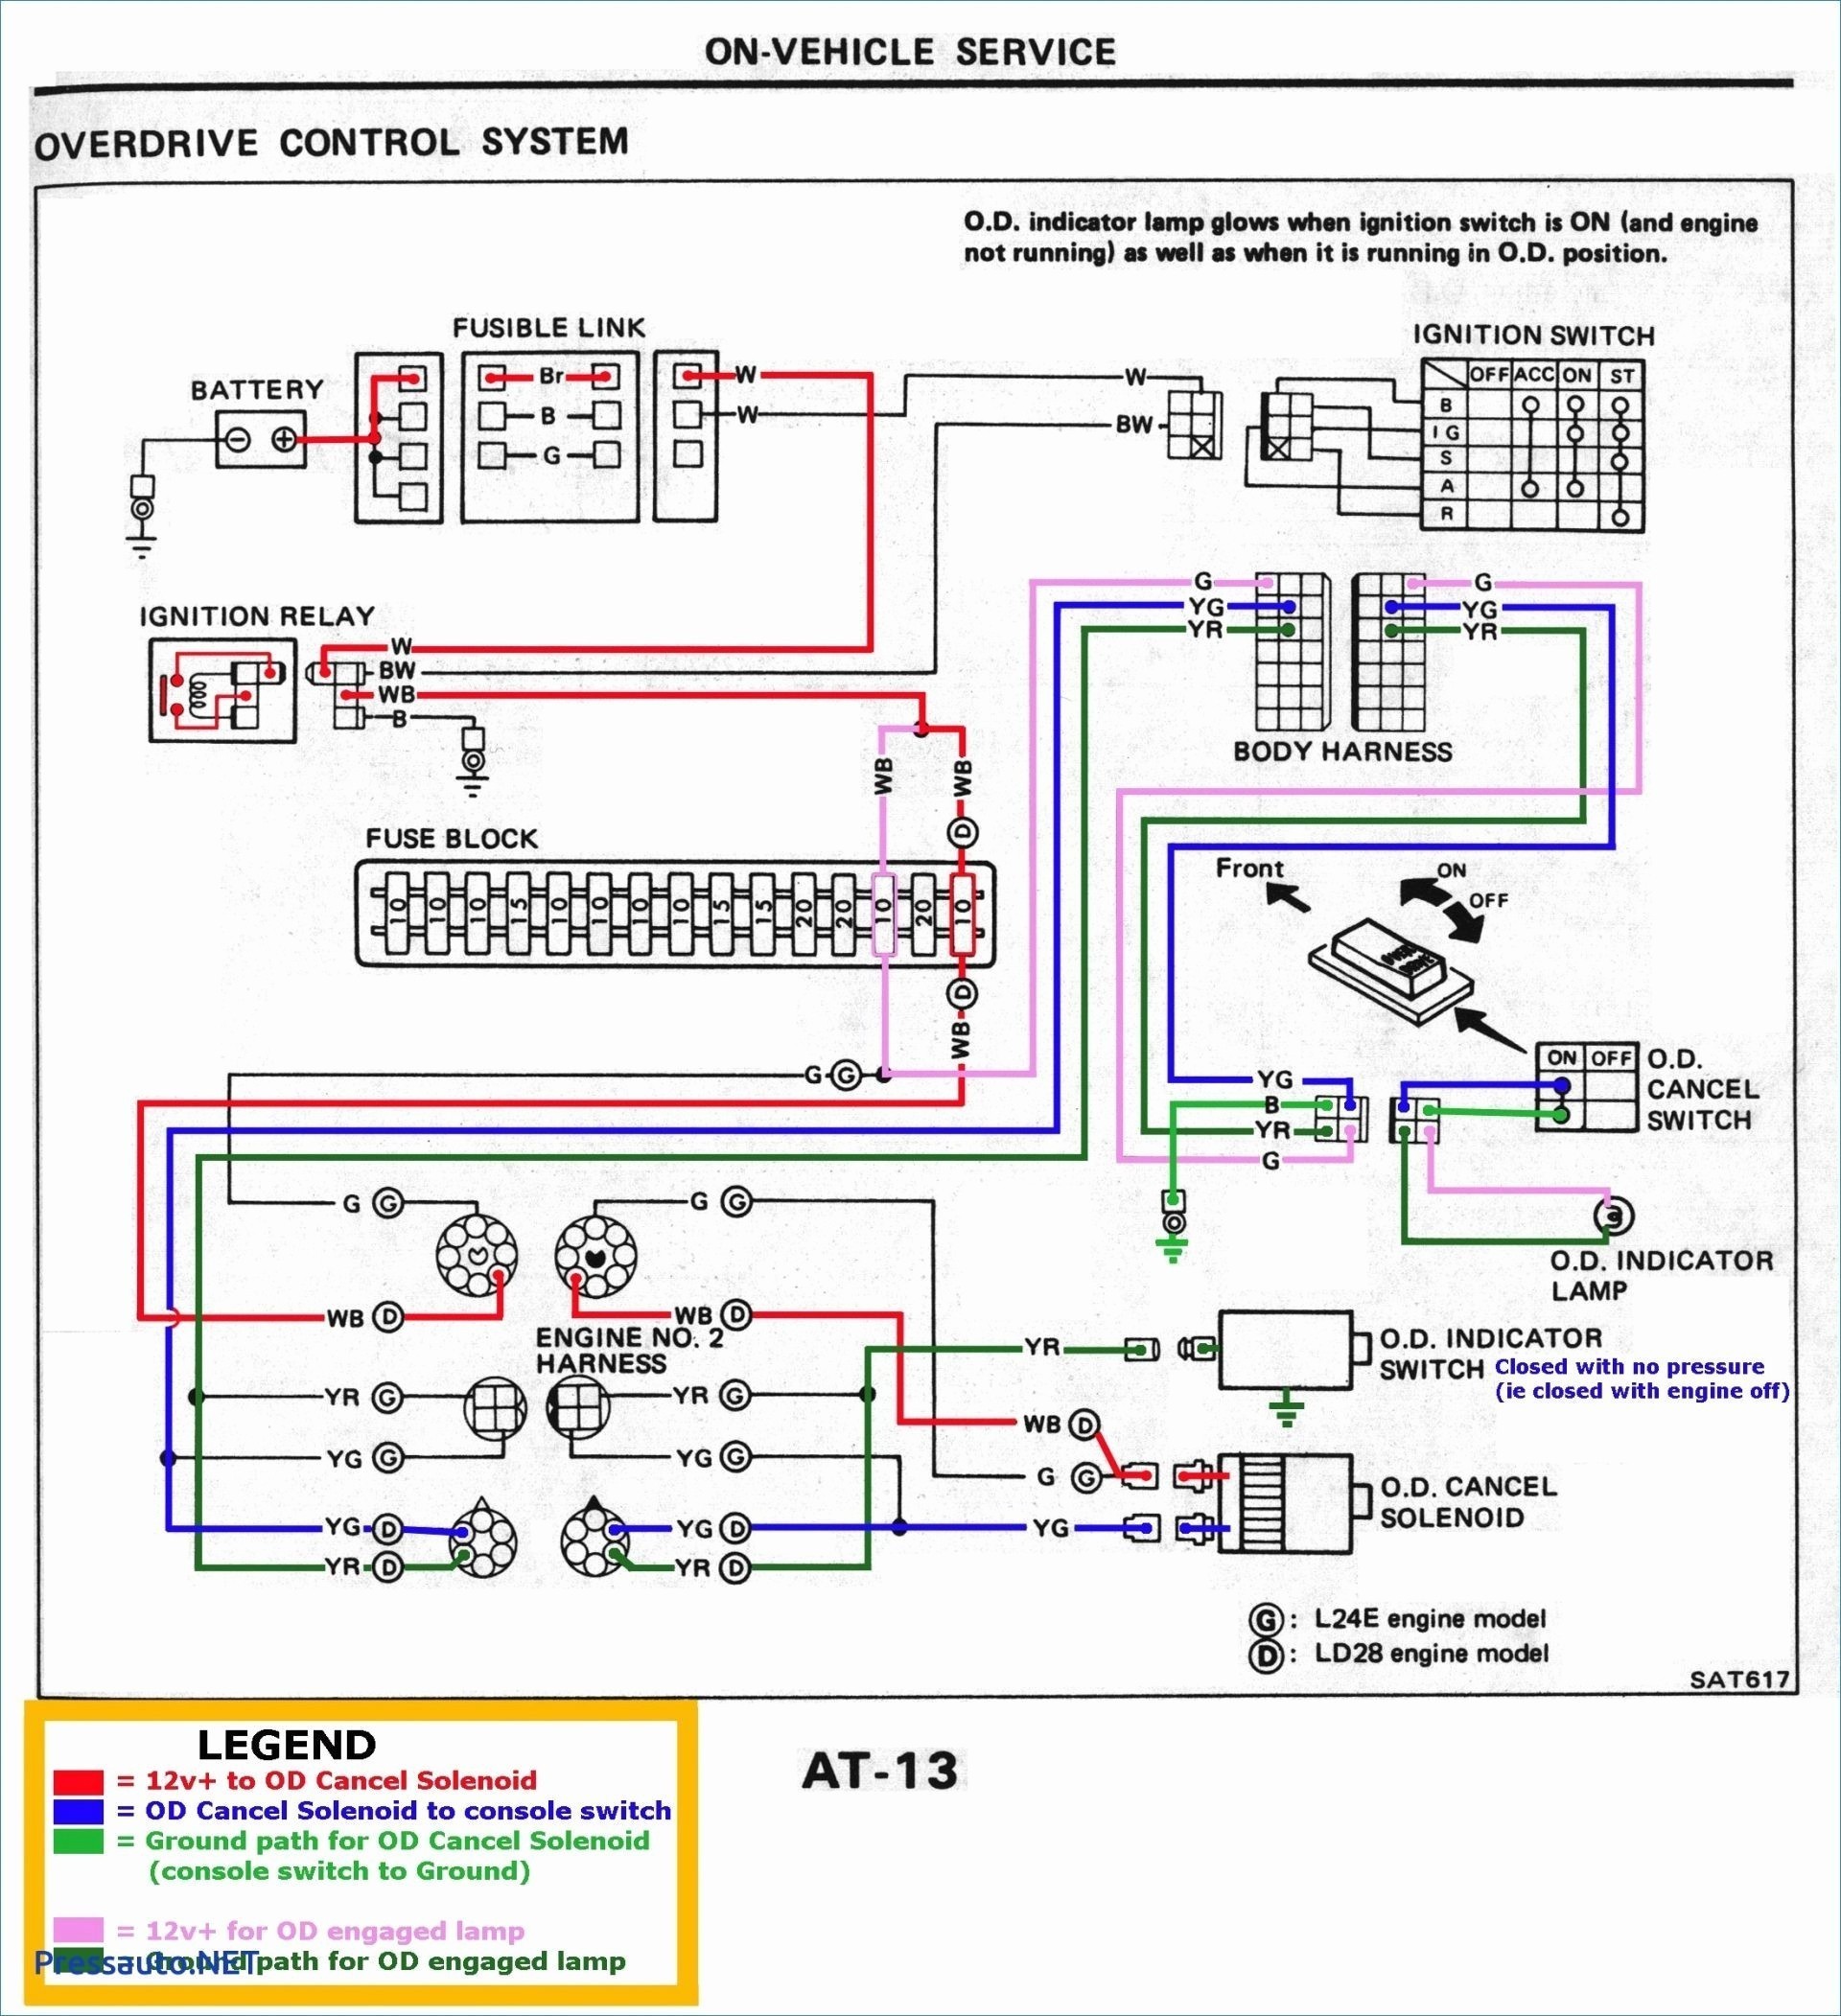 Car Engine Layout Diagram Wiring Diagrams Explained Layout Wiring Diagrams • Of Car Engine Layout Diagram